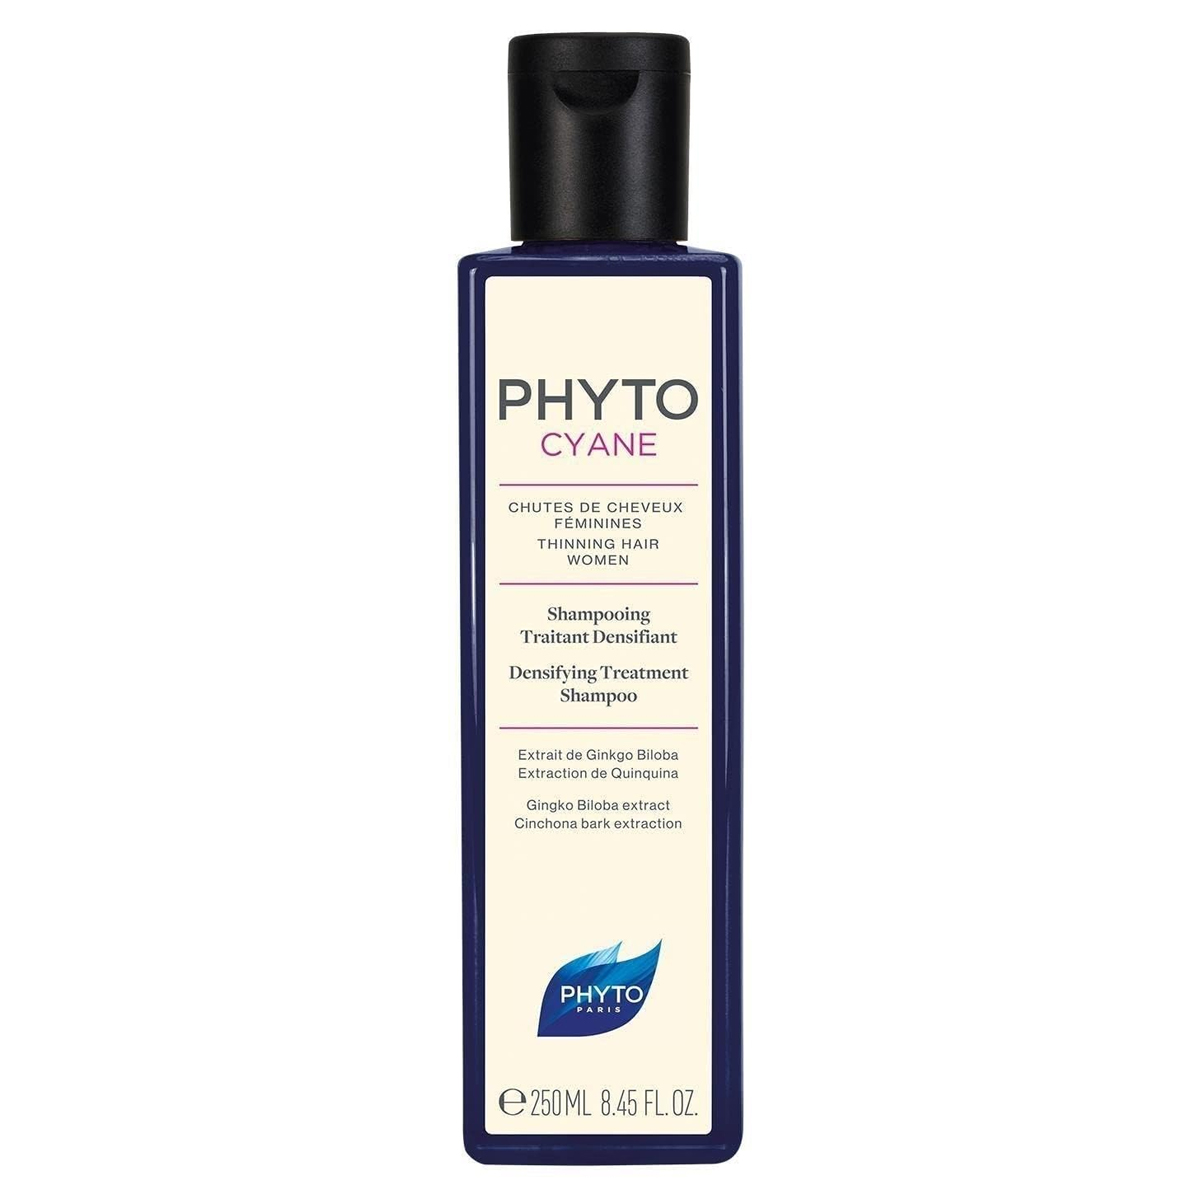 شامپو محافظ رنگ مو~Color Protecting Shampoo~PHYTO